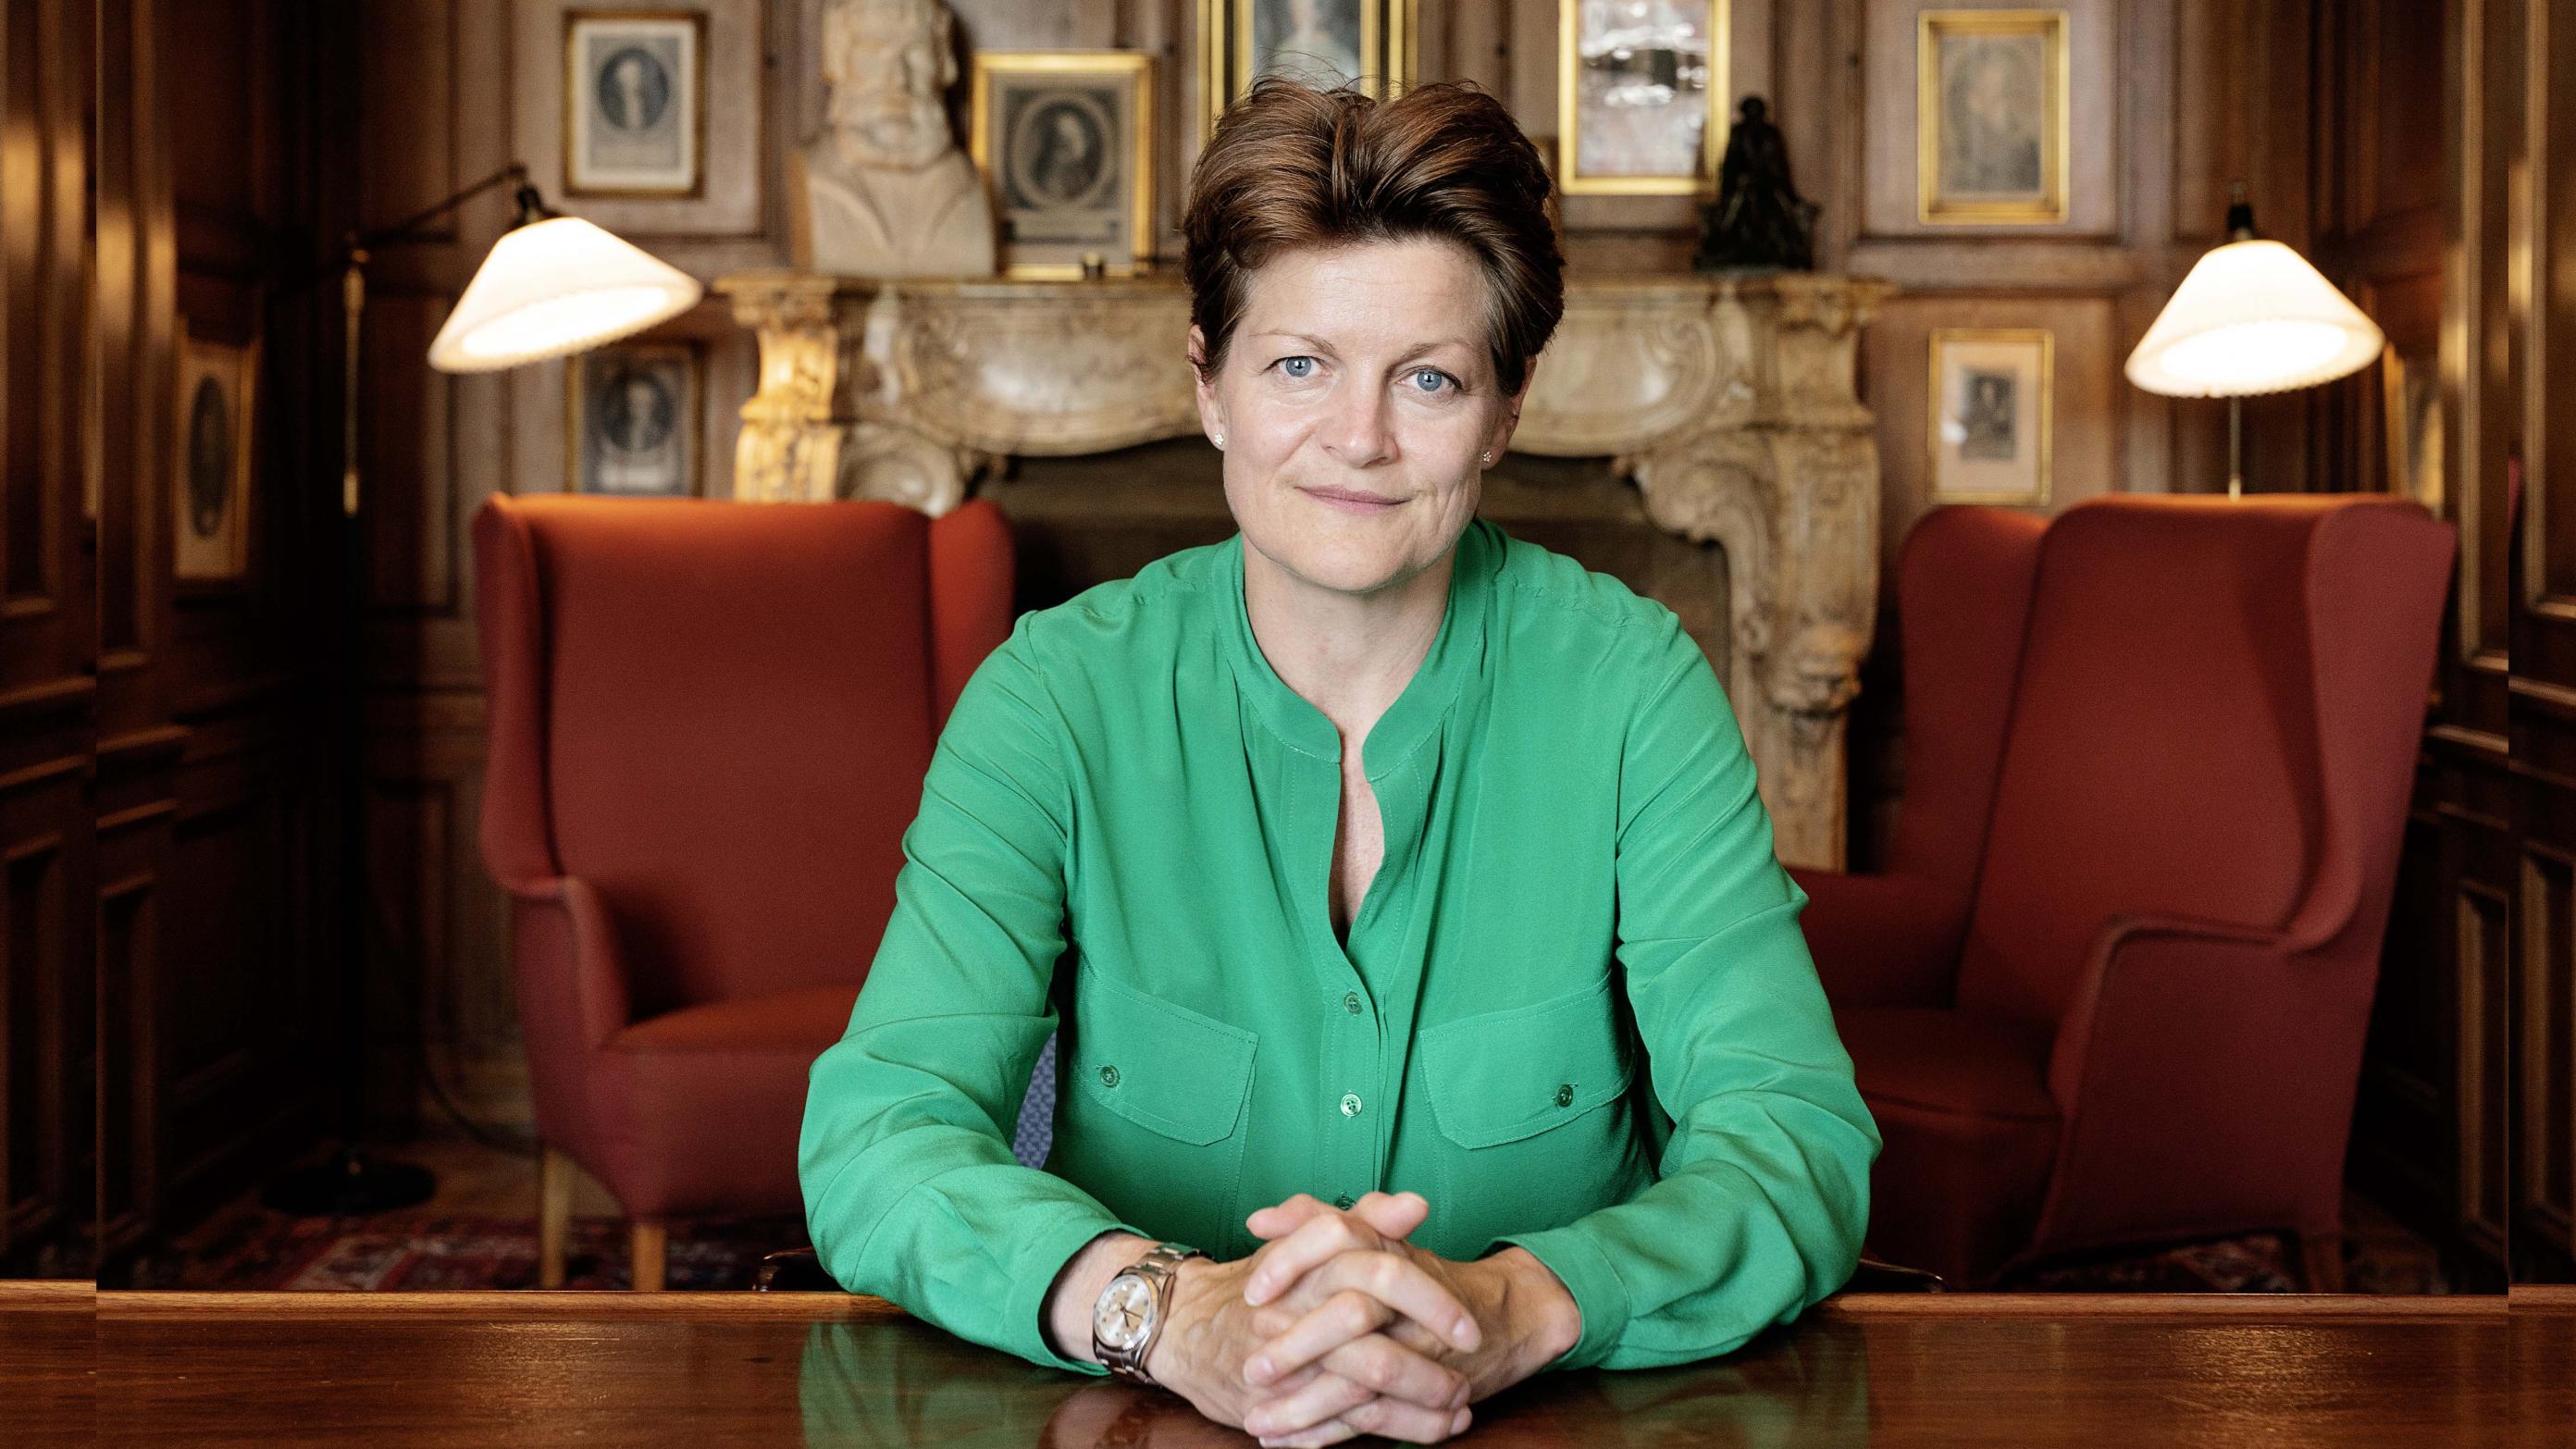 Formand for Lægeforeningen, Camilla Rathcke, fredag den 26. juni 2020. Foto: Claus Bech